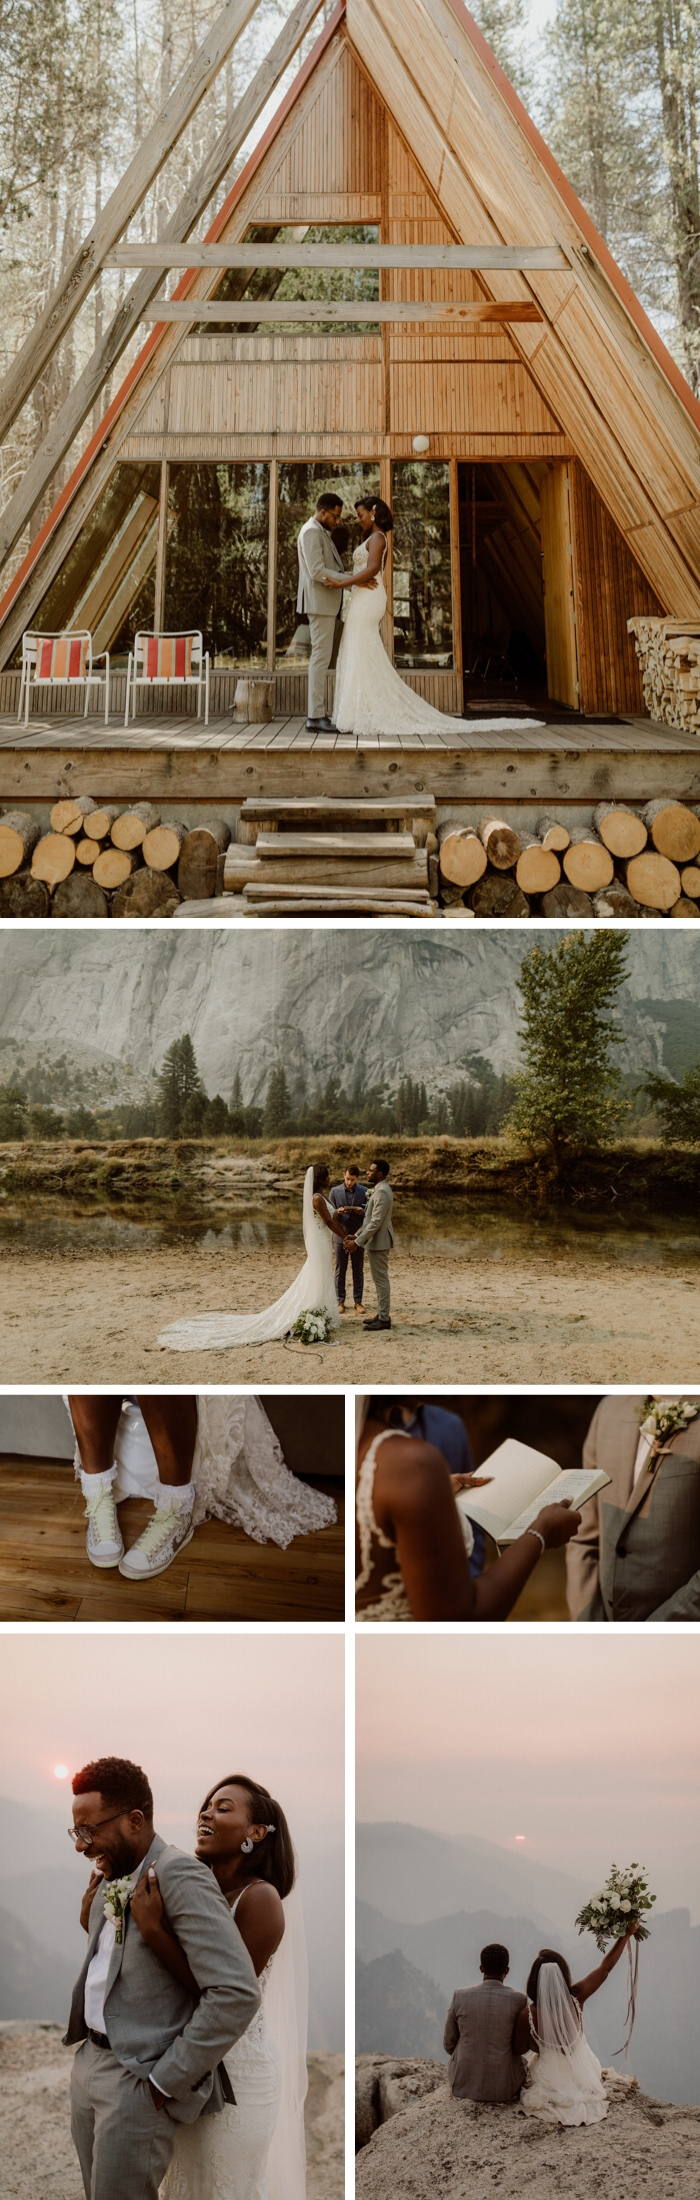 https://junebugweddings.com/wedding-blog/wp-content/uploads/2020/04/20-intimate-elopements-that-prove-less-can-be-more-cedar-and-pines.jpg